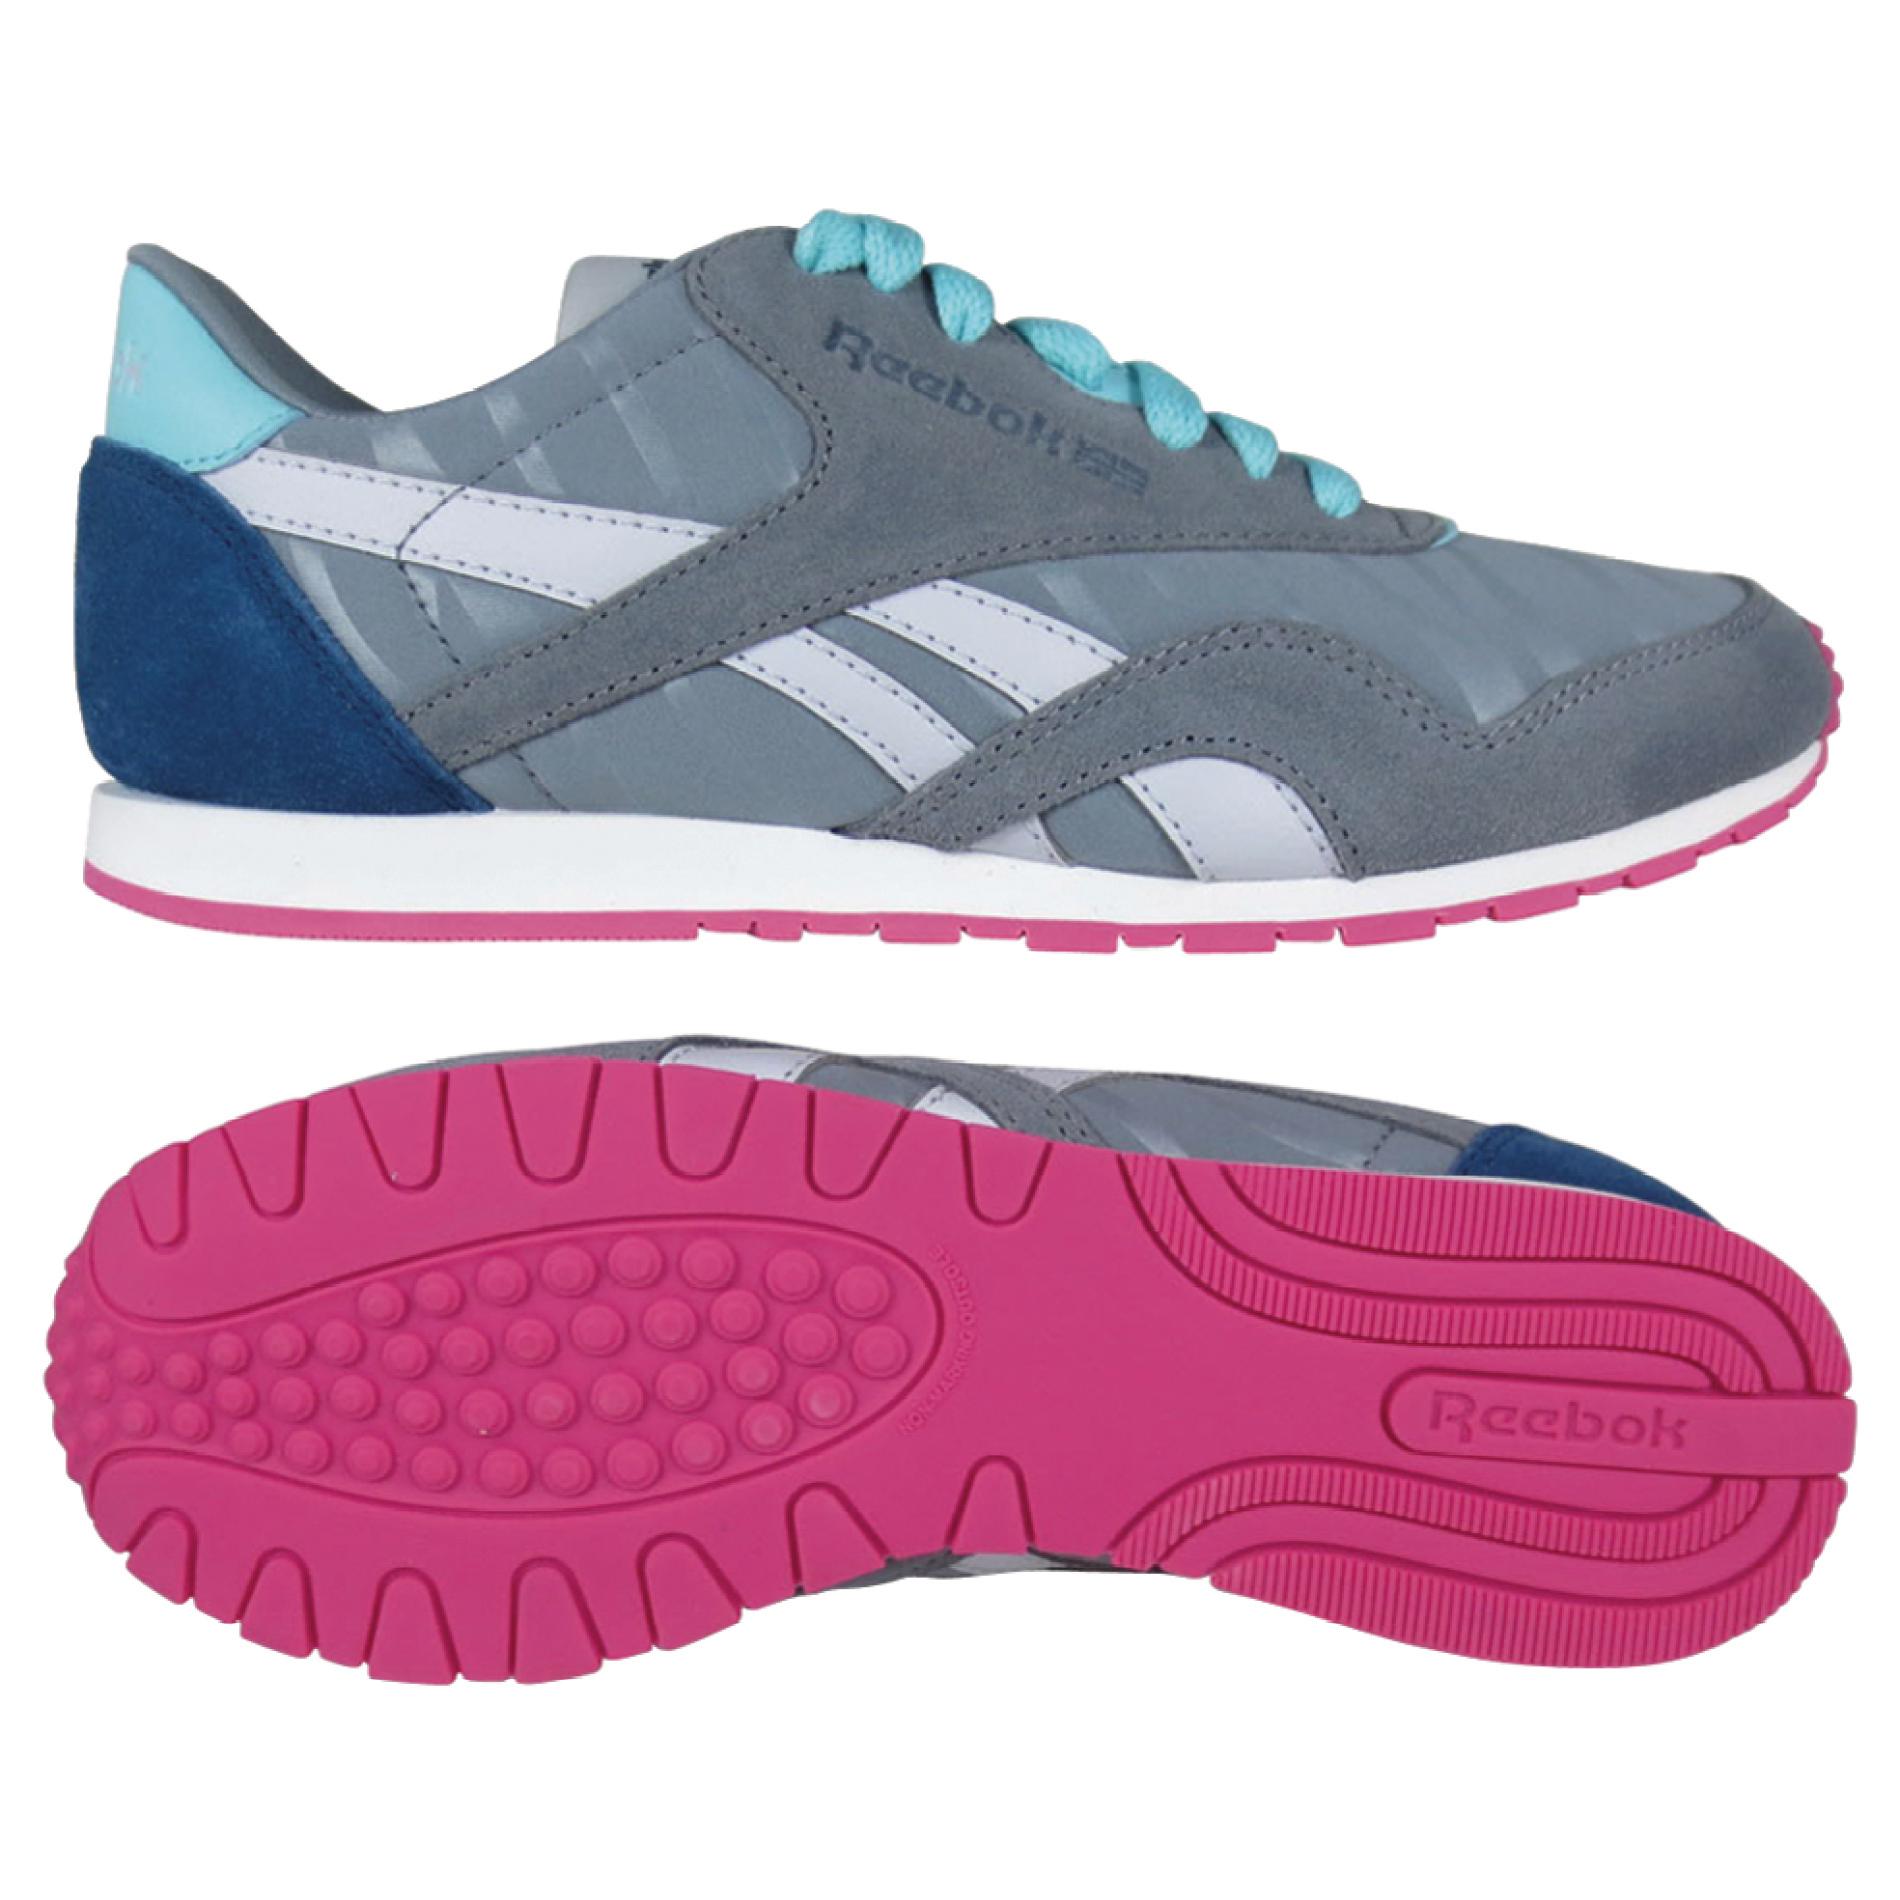 Reebok Women's Classic Nylon Slim Candy Girl Athletic Shoe - Gray/Lt Blue/Pink